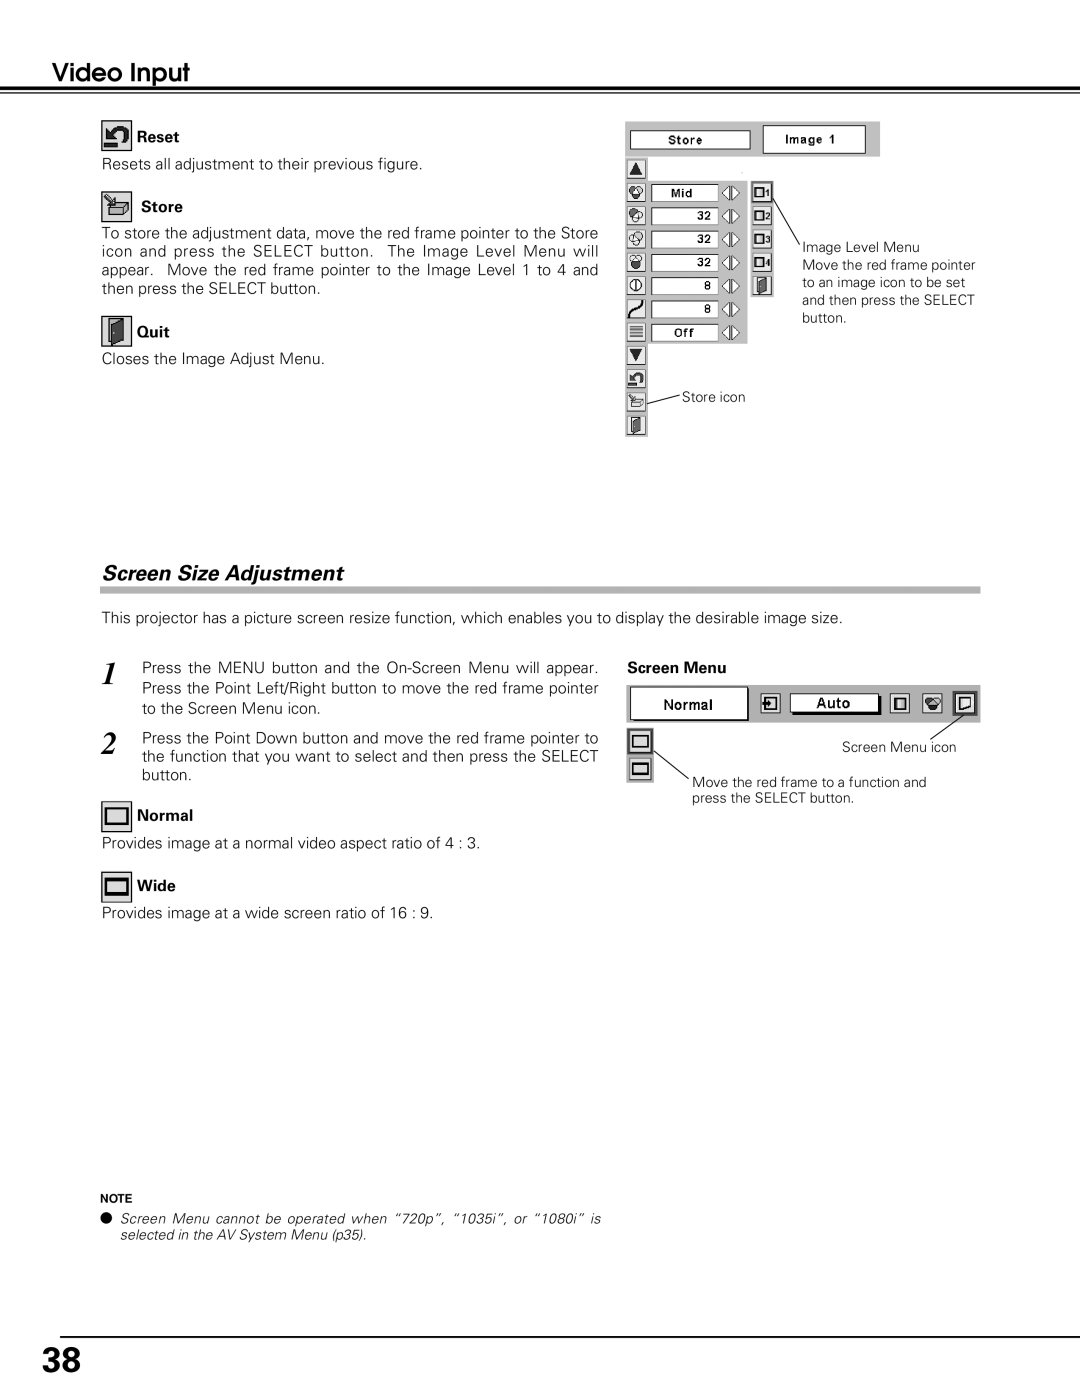 Black Box LC-XE10 instruction manual Video Input, Screen Size Adjustment, Reset, Store, Quit, Normal, Wide, Screen Menu 